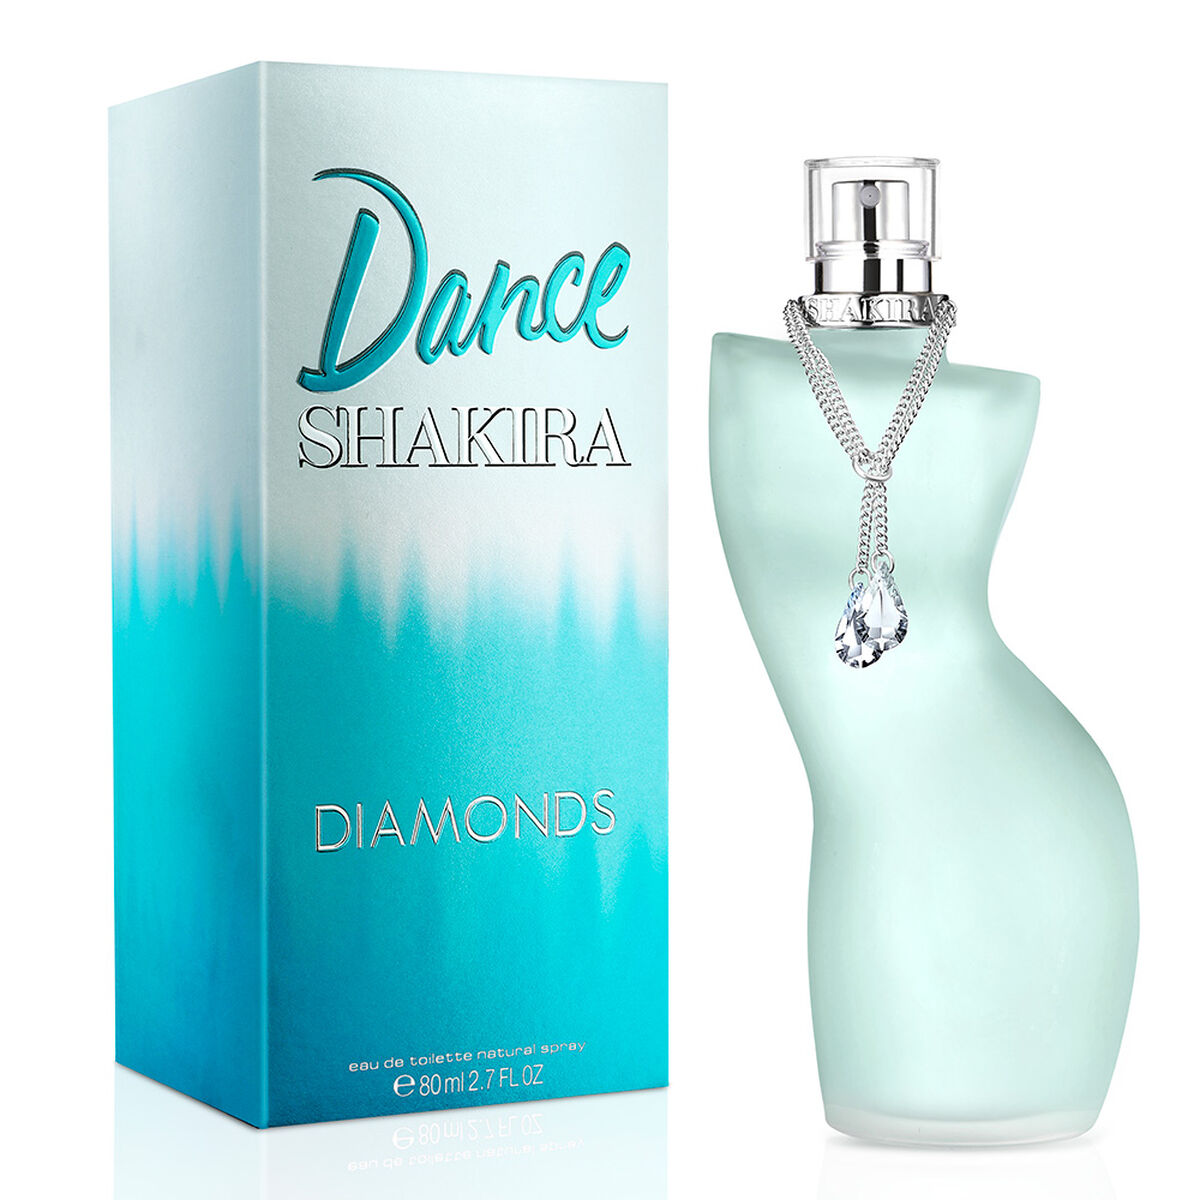 Perfume Shakira Dance Diamond EDT 80 ml